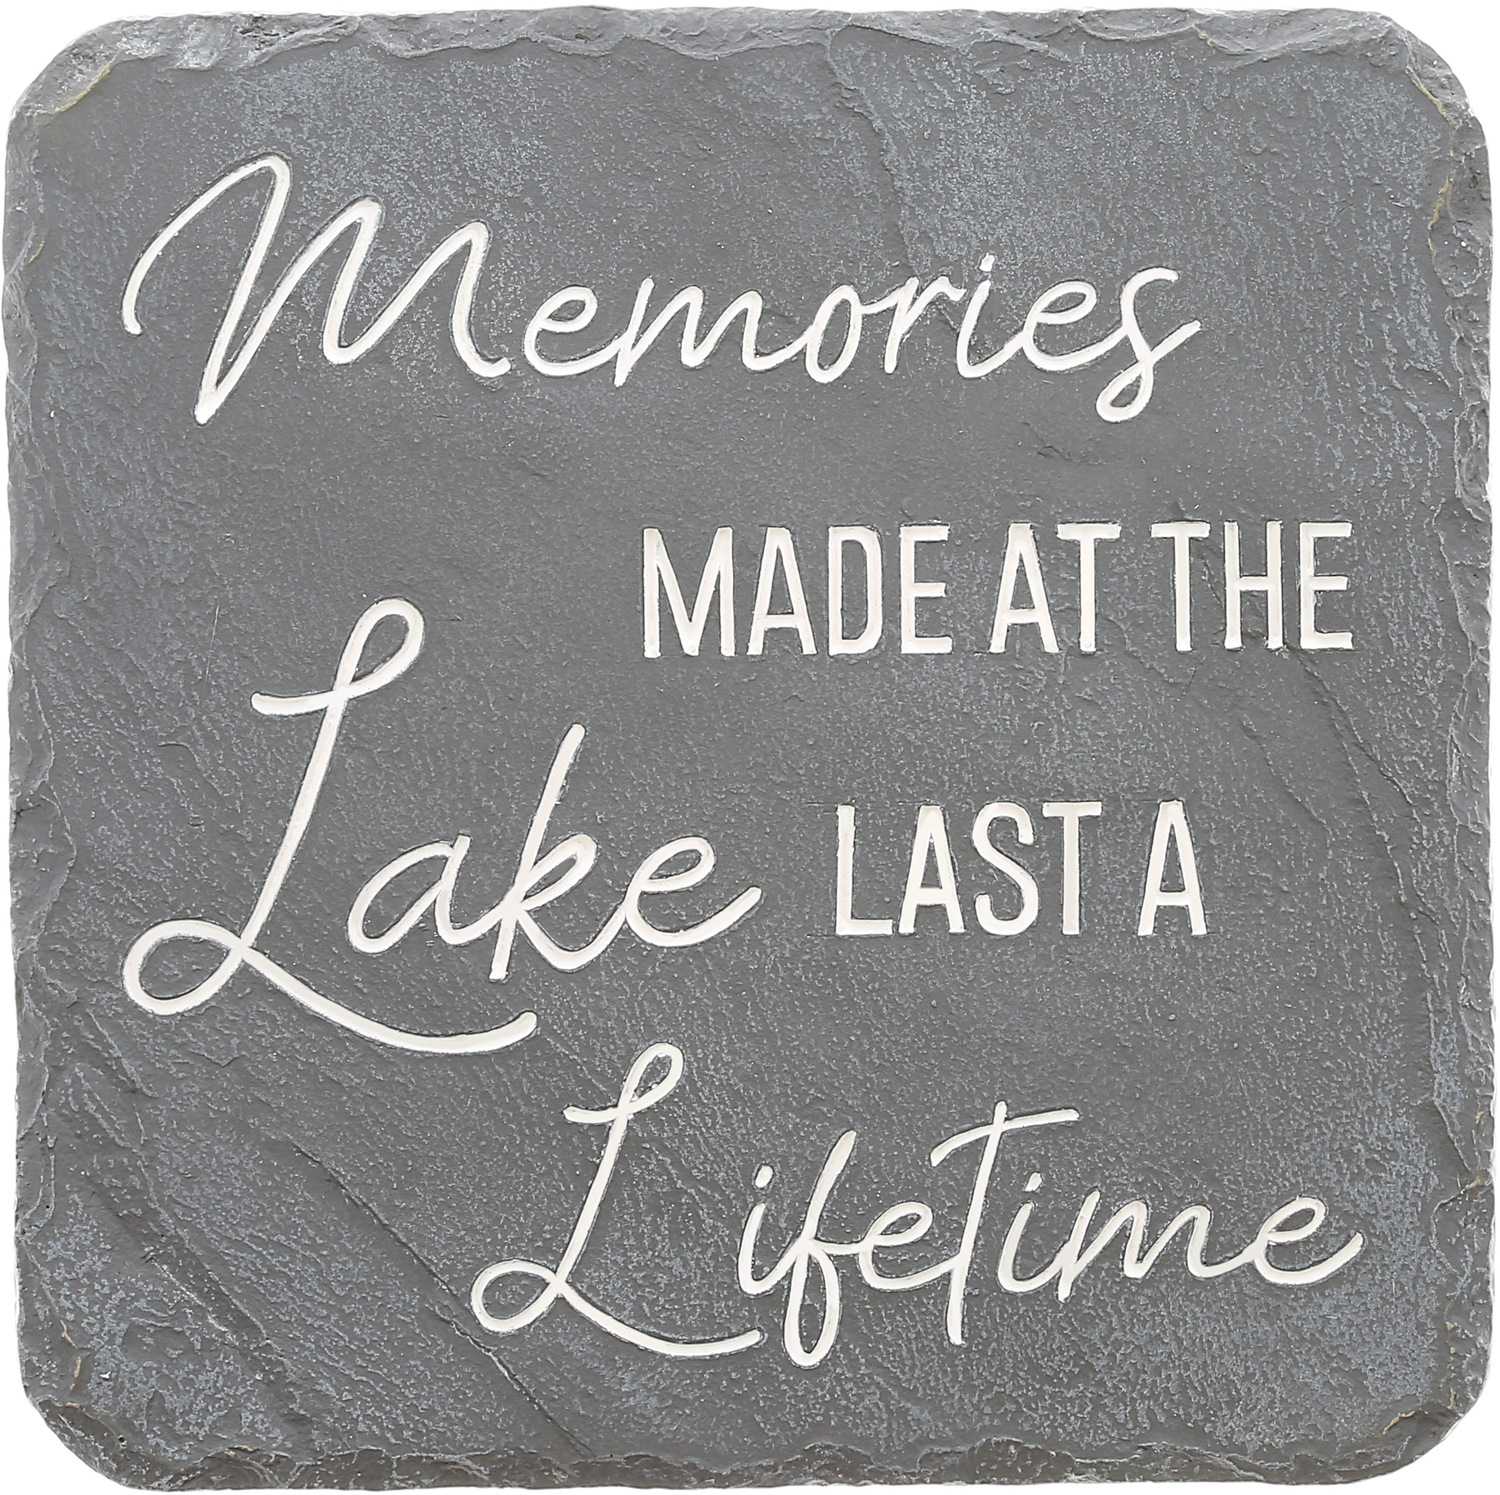 Lake Lifetime by Stones with Stories - Lake Lifetime - 7.75" x 7.75" Garden Stone